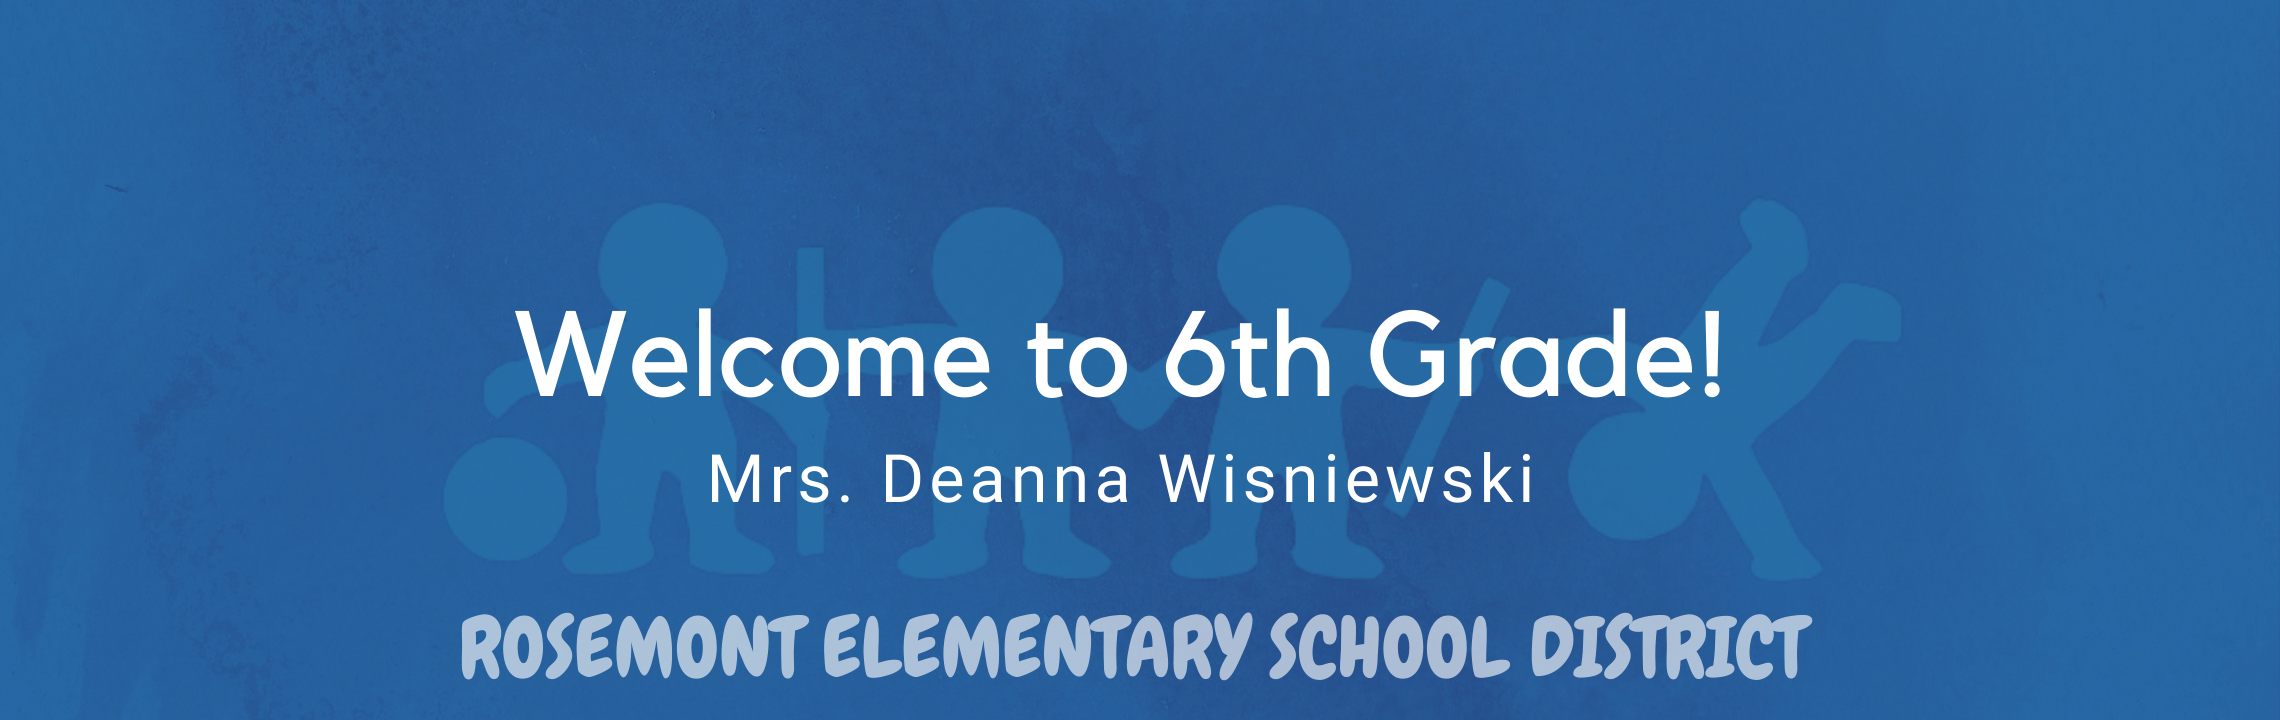 Welcome to 6th Grade, Mrs. Deanna Wisniewski, Rosemont Elementary Schools 